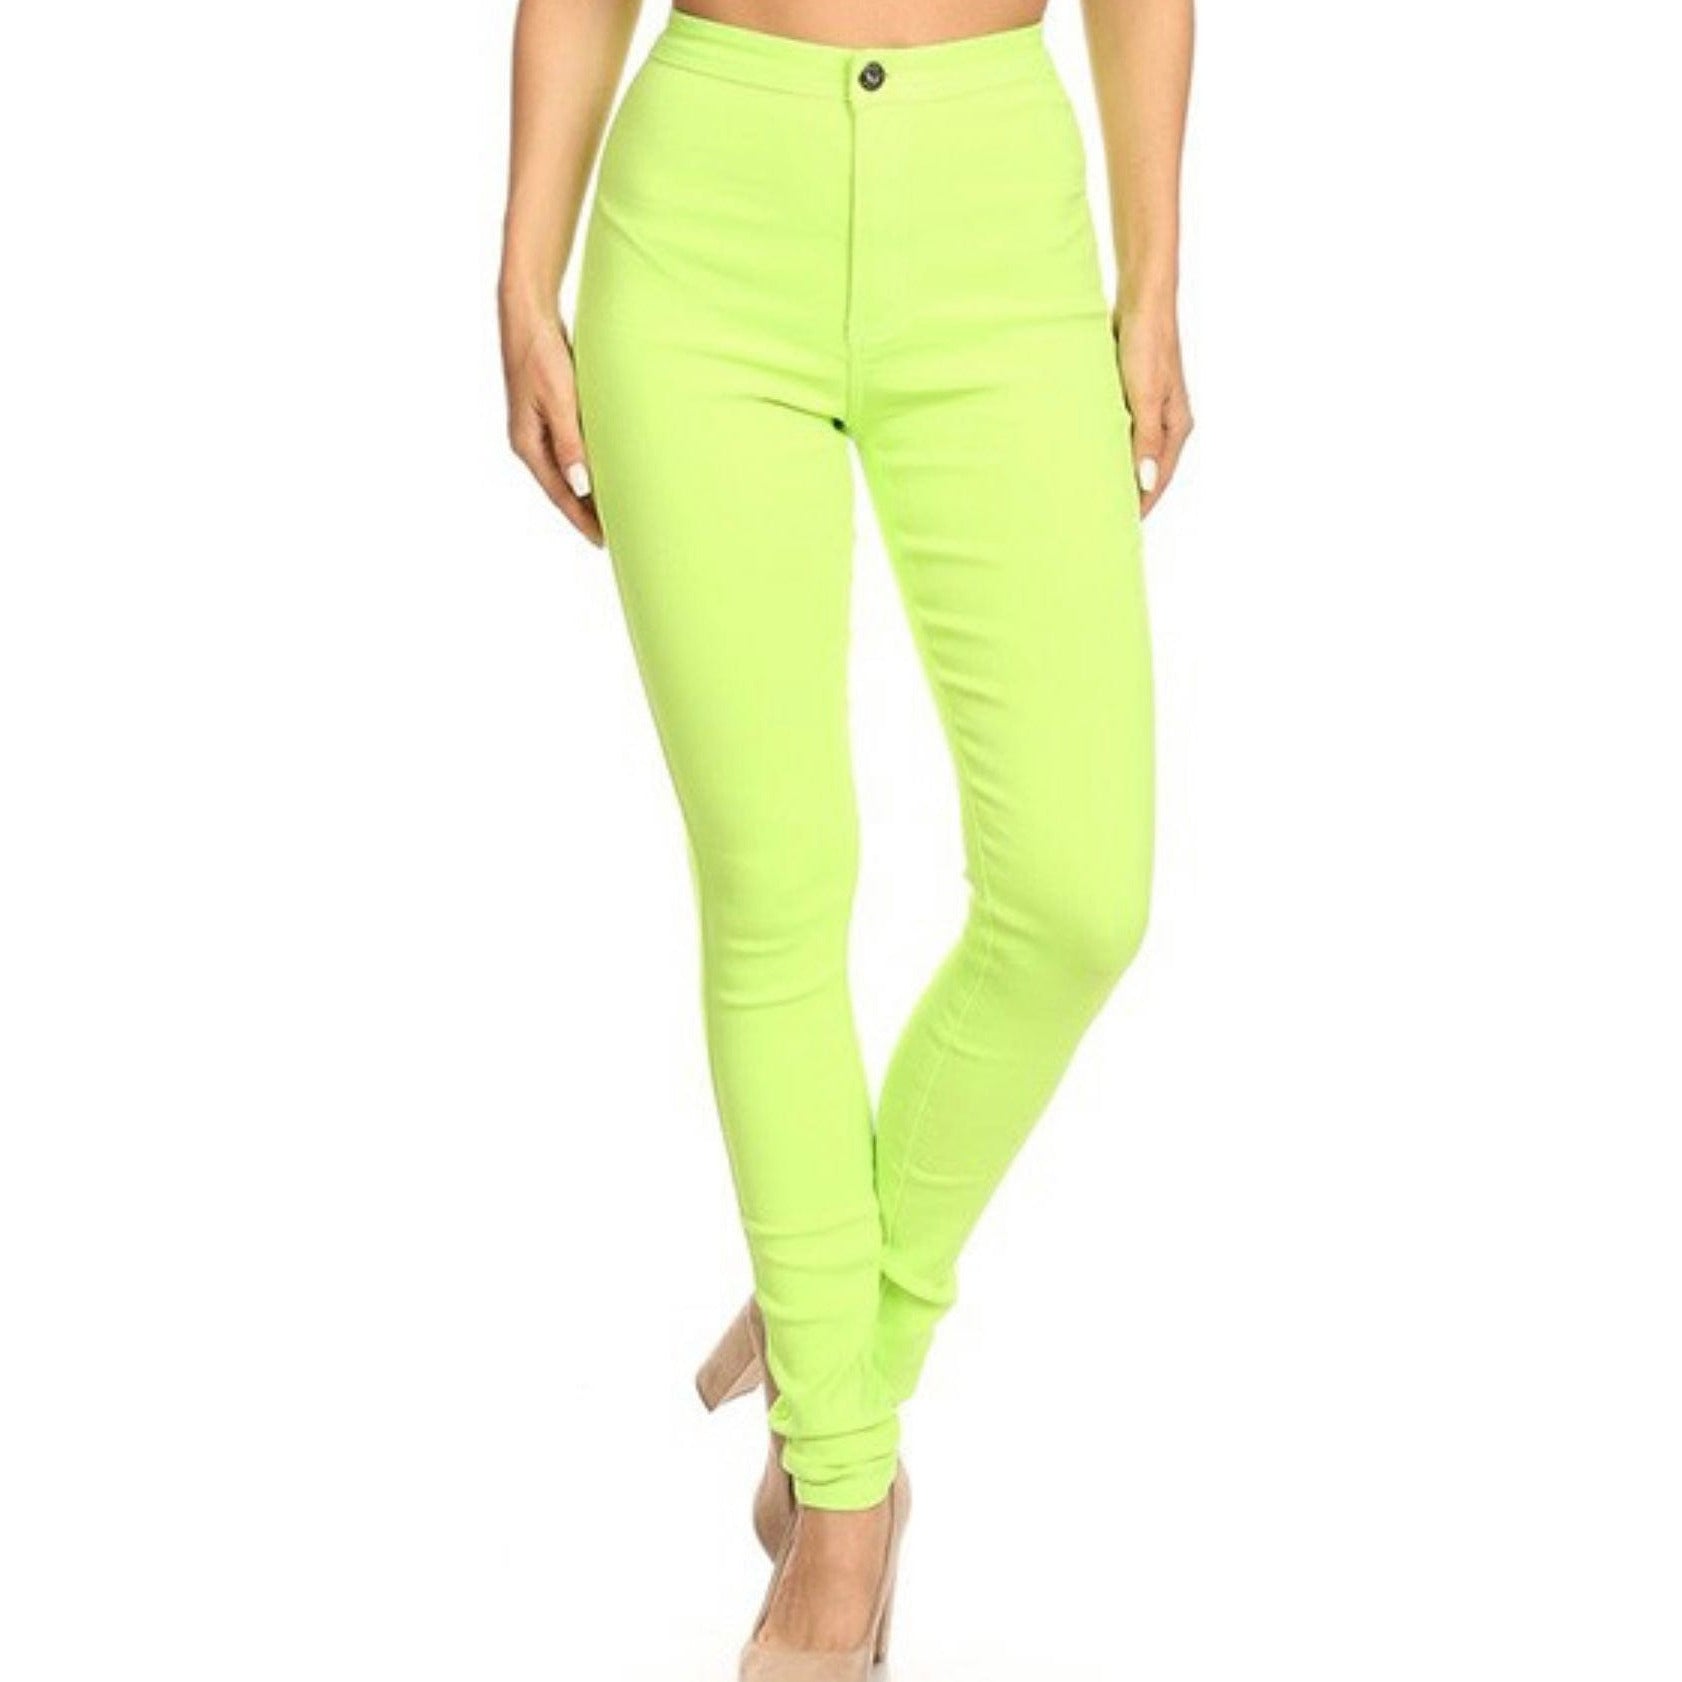 Neon Green Jegging Pants